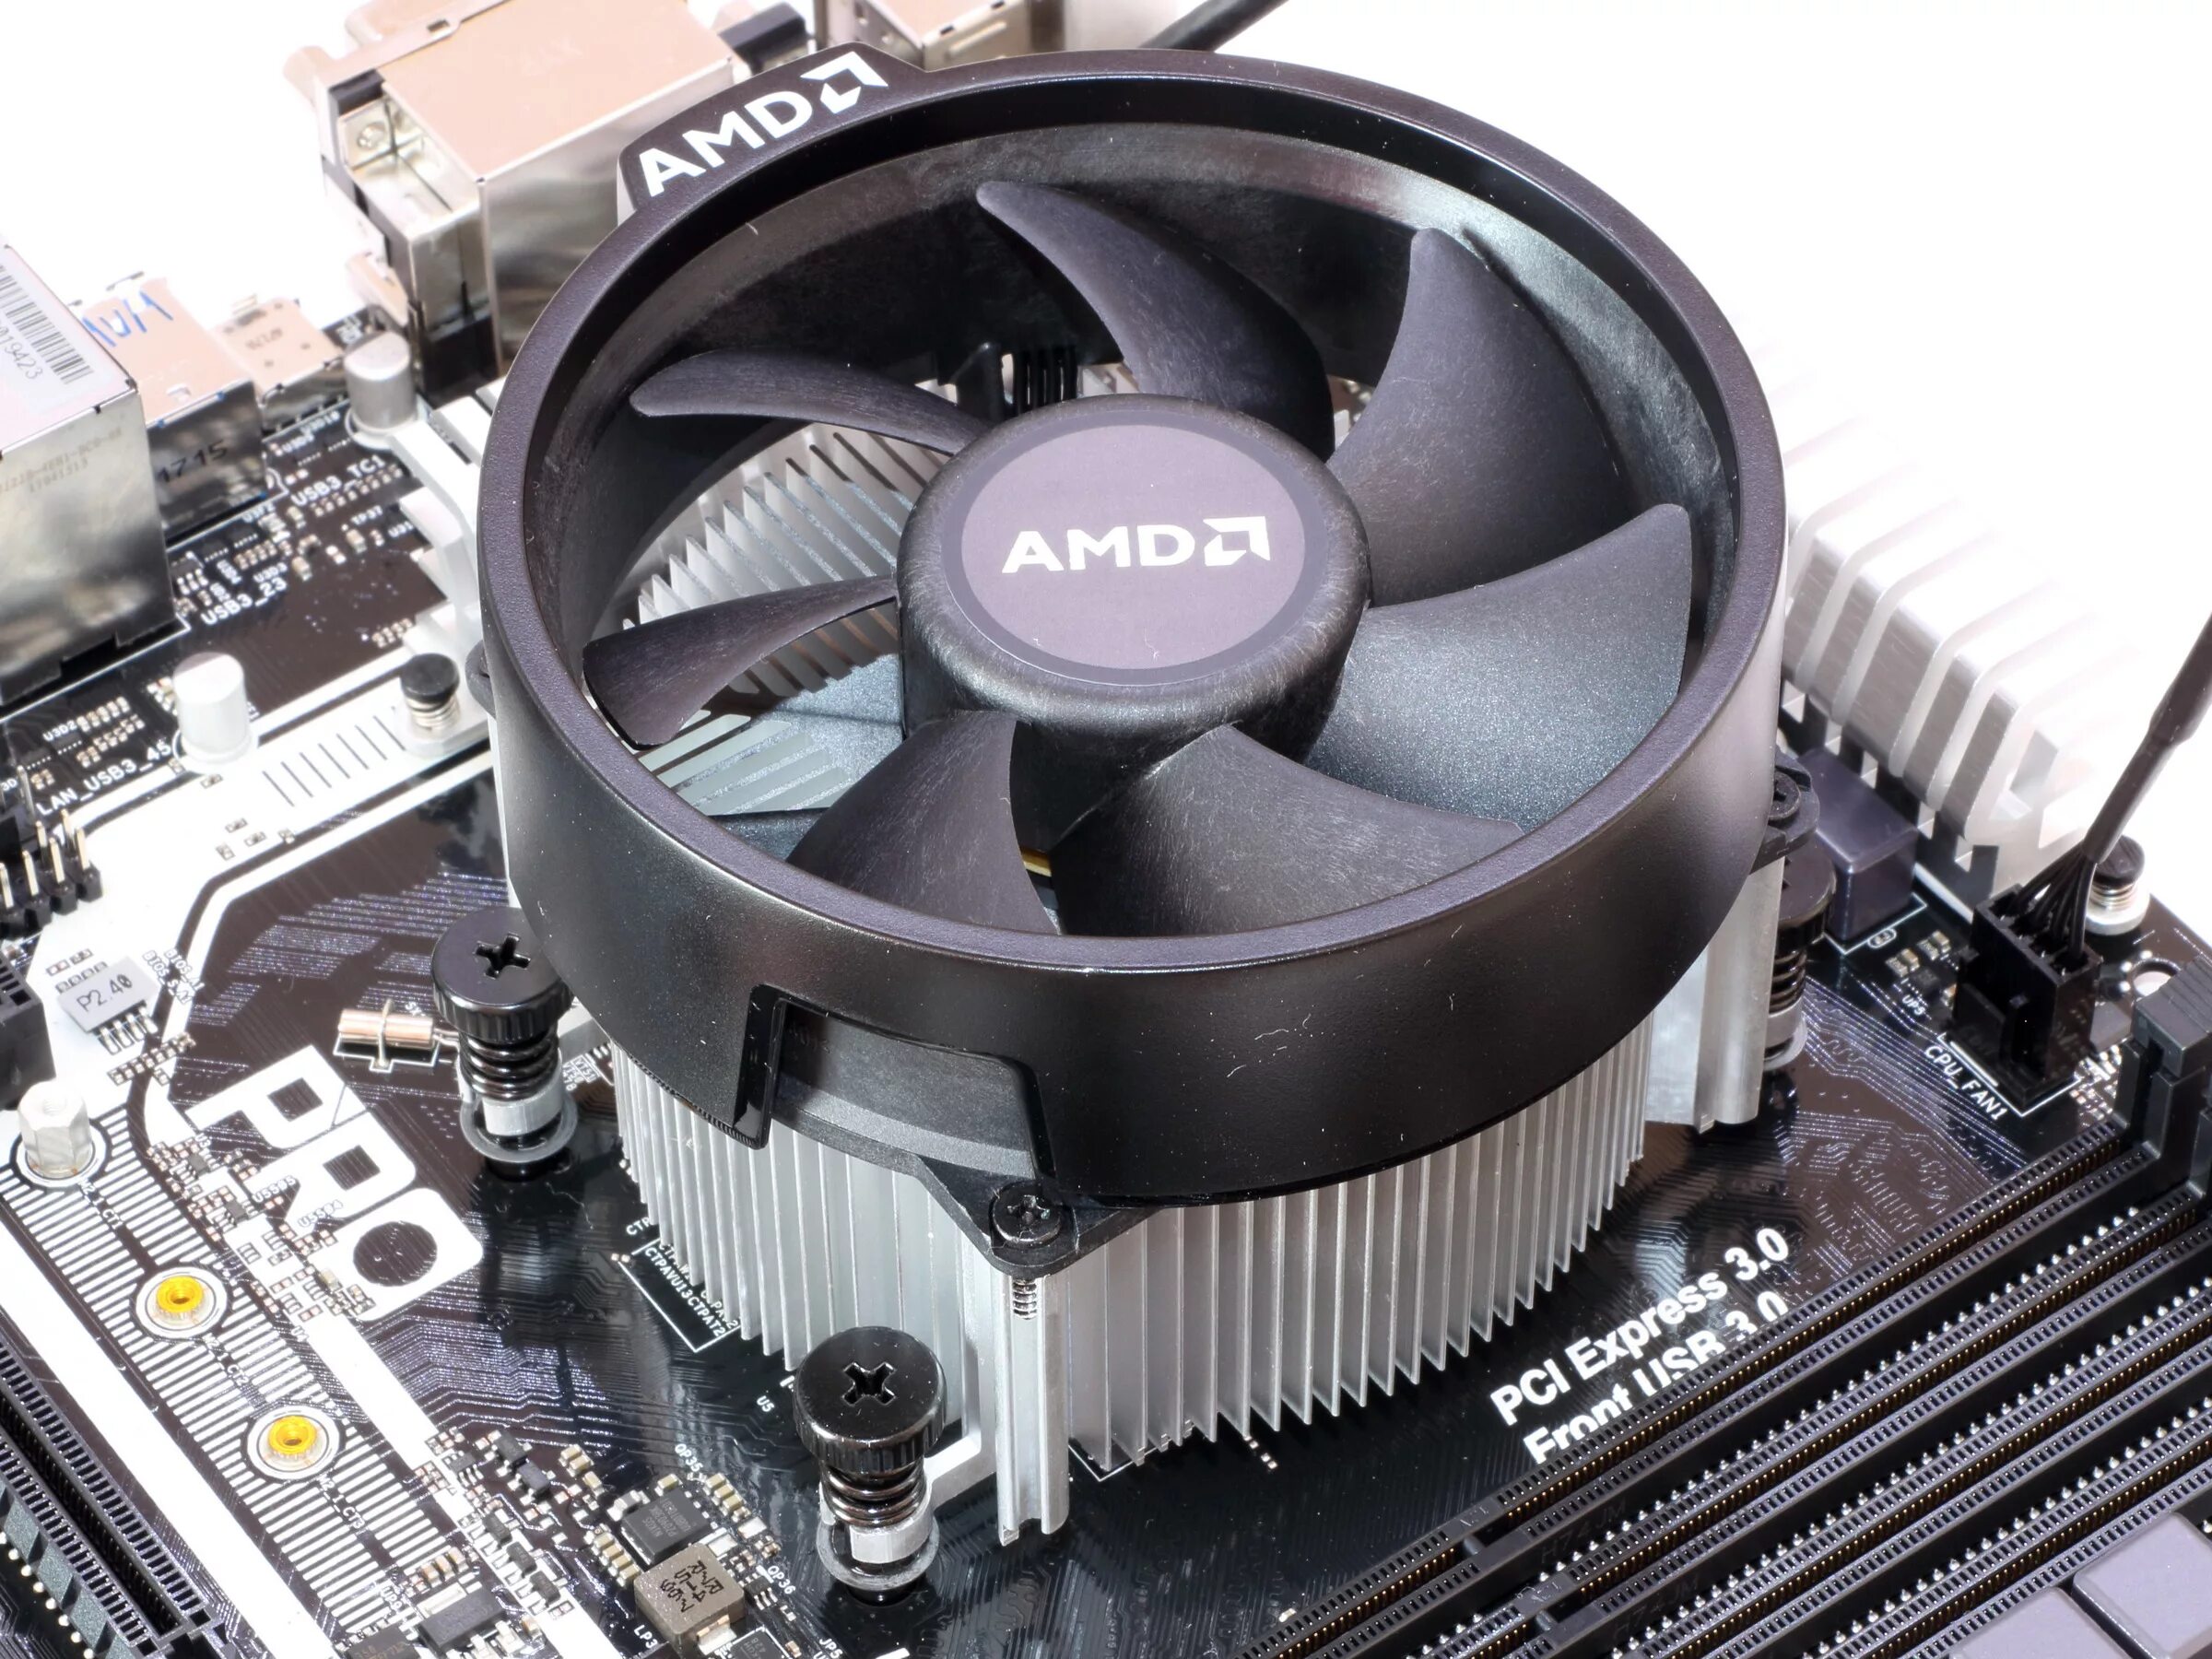 Кулер AMD Wraith Spire. Кулер AMD Wraith Spire Cooler am4. Кулер для процессора AMD Wraith Stealth. AMD Wraith Spire Cooler am4.